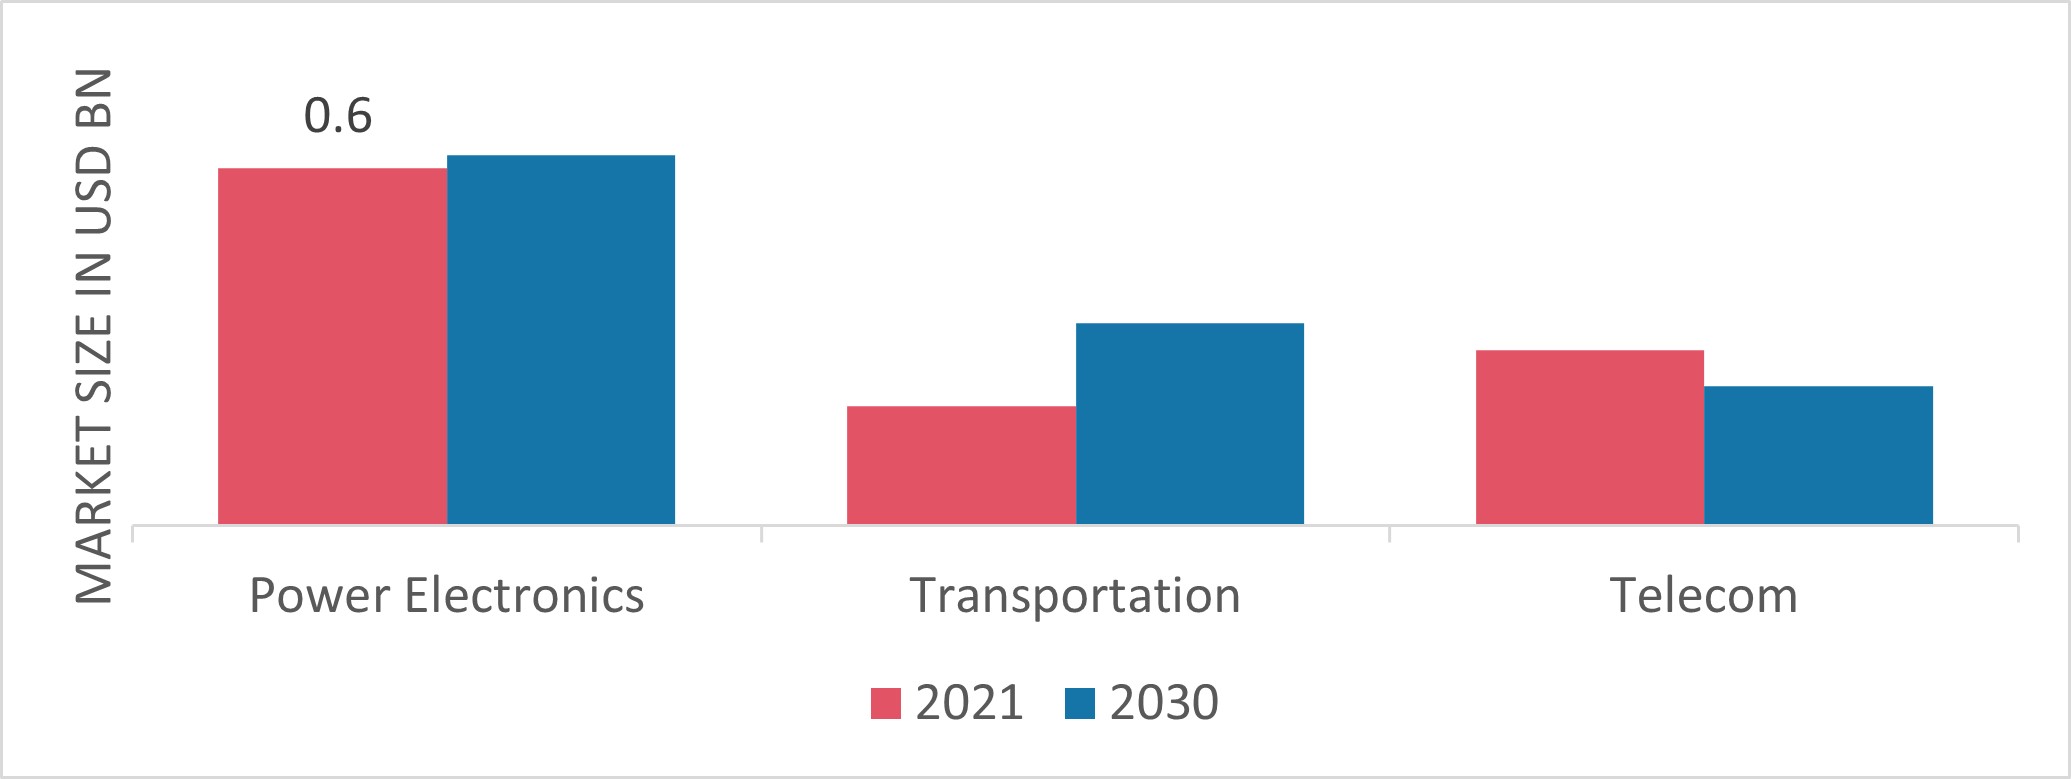 Laminated Busbar Market, by End Usser, 2021 & 2030